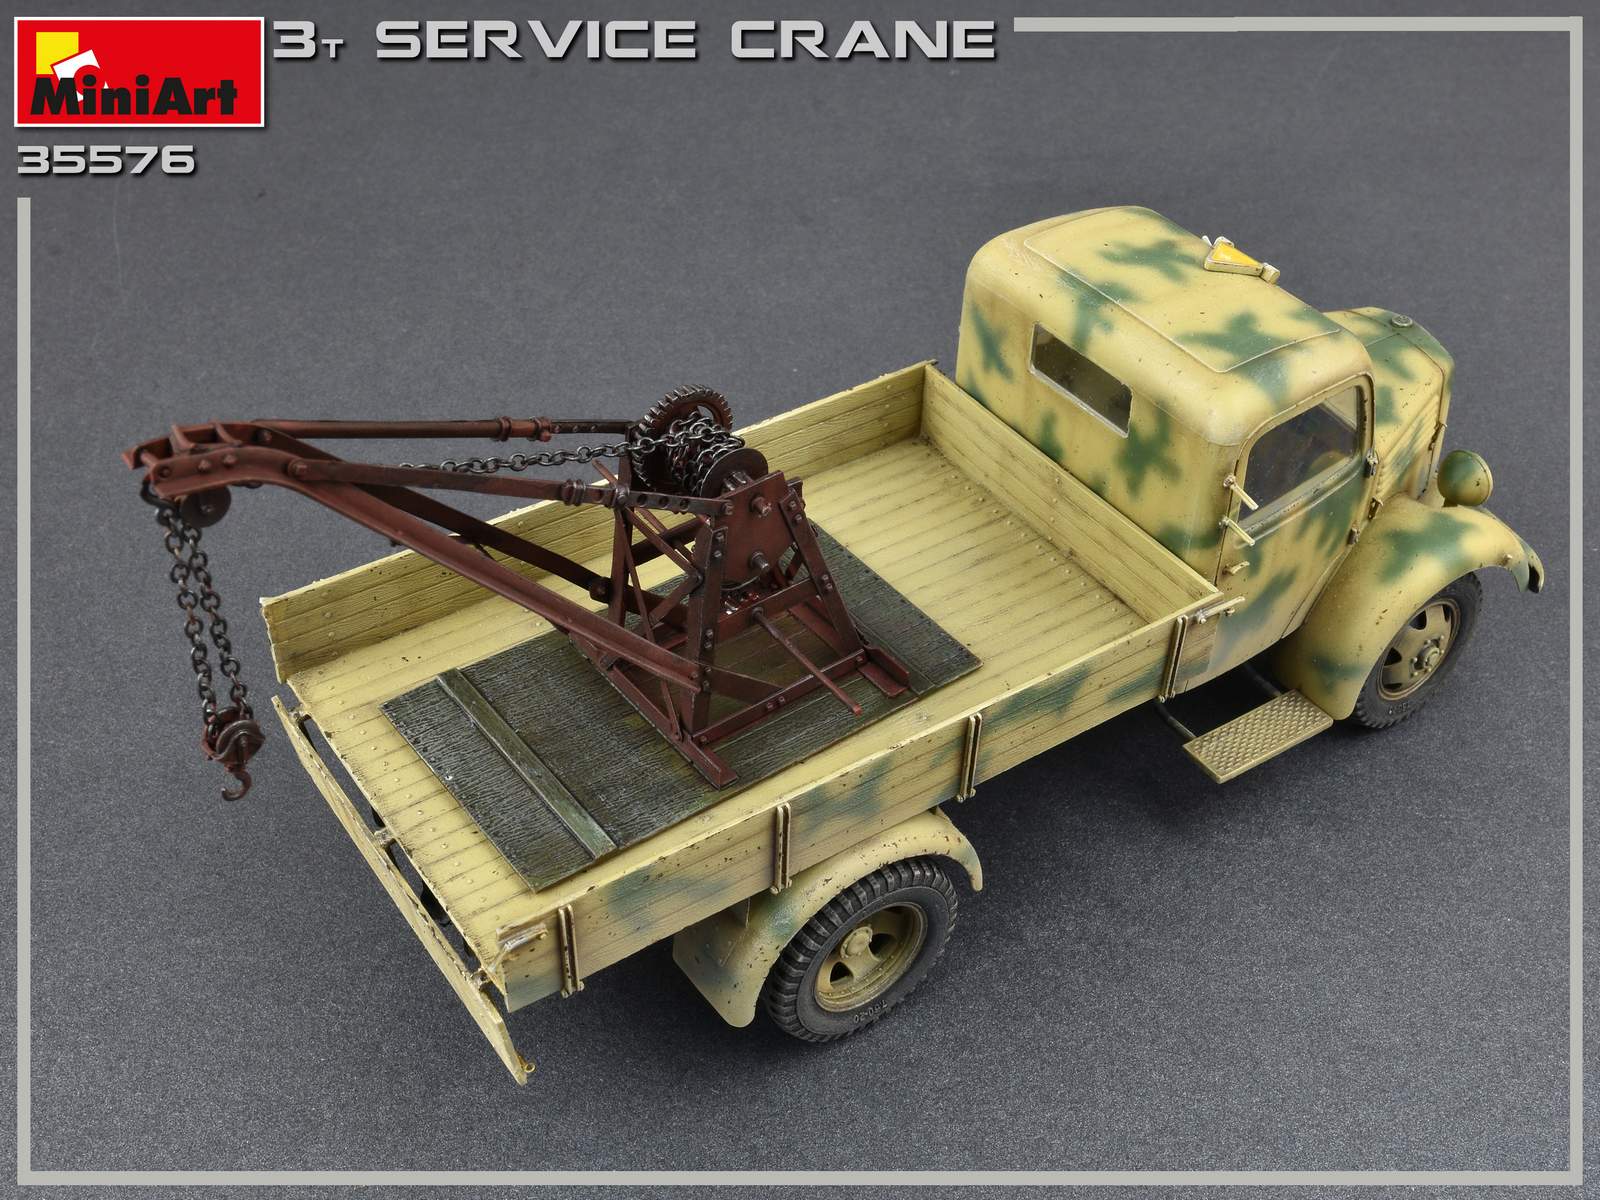 Miniart 1:35-3 Ton Service Crane MIN35576 